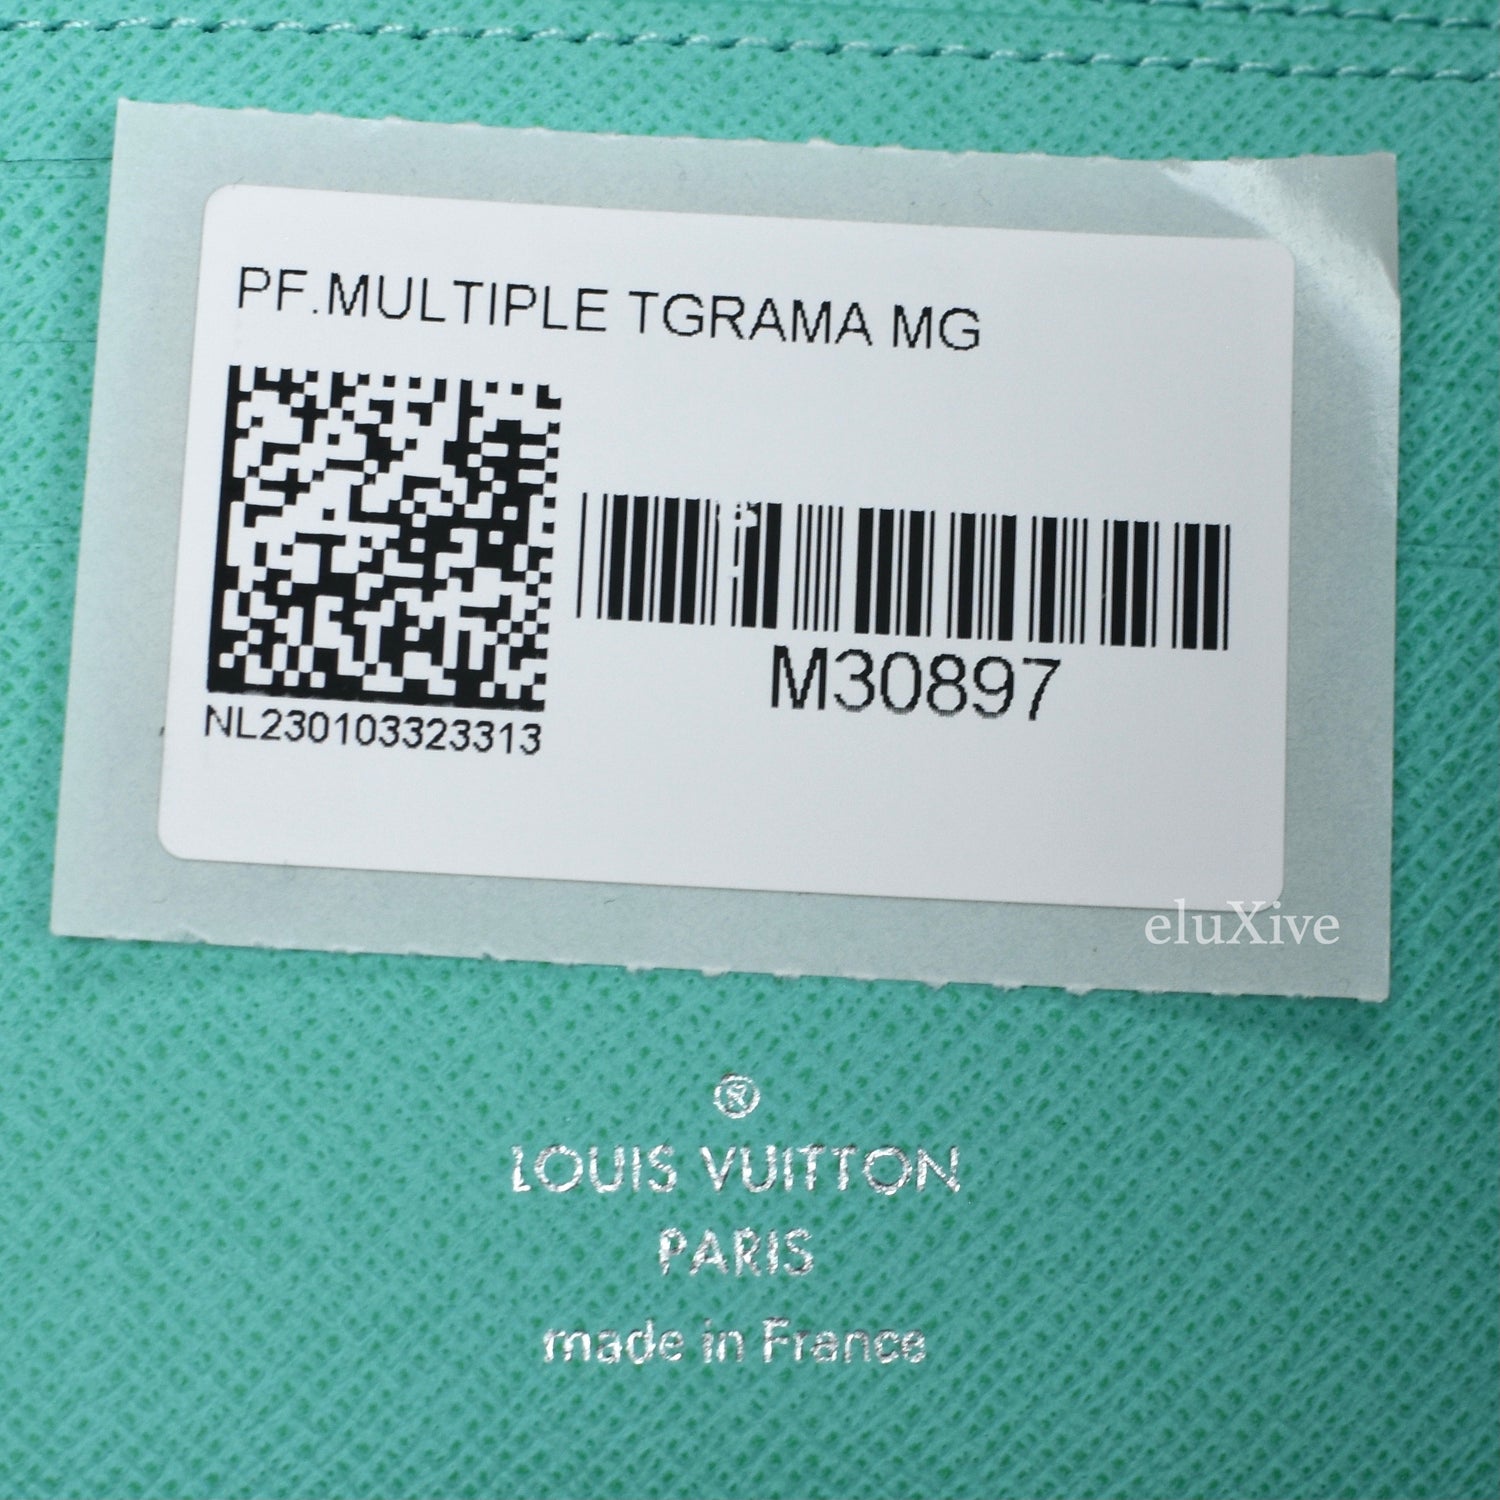 Louis Vuitton Pocket Organizer Miami Green in Monogram Coated